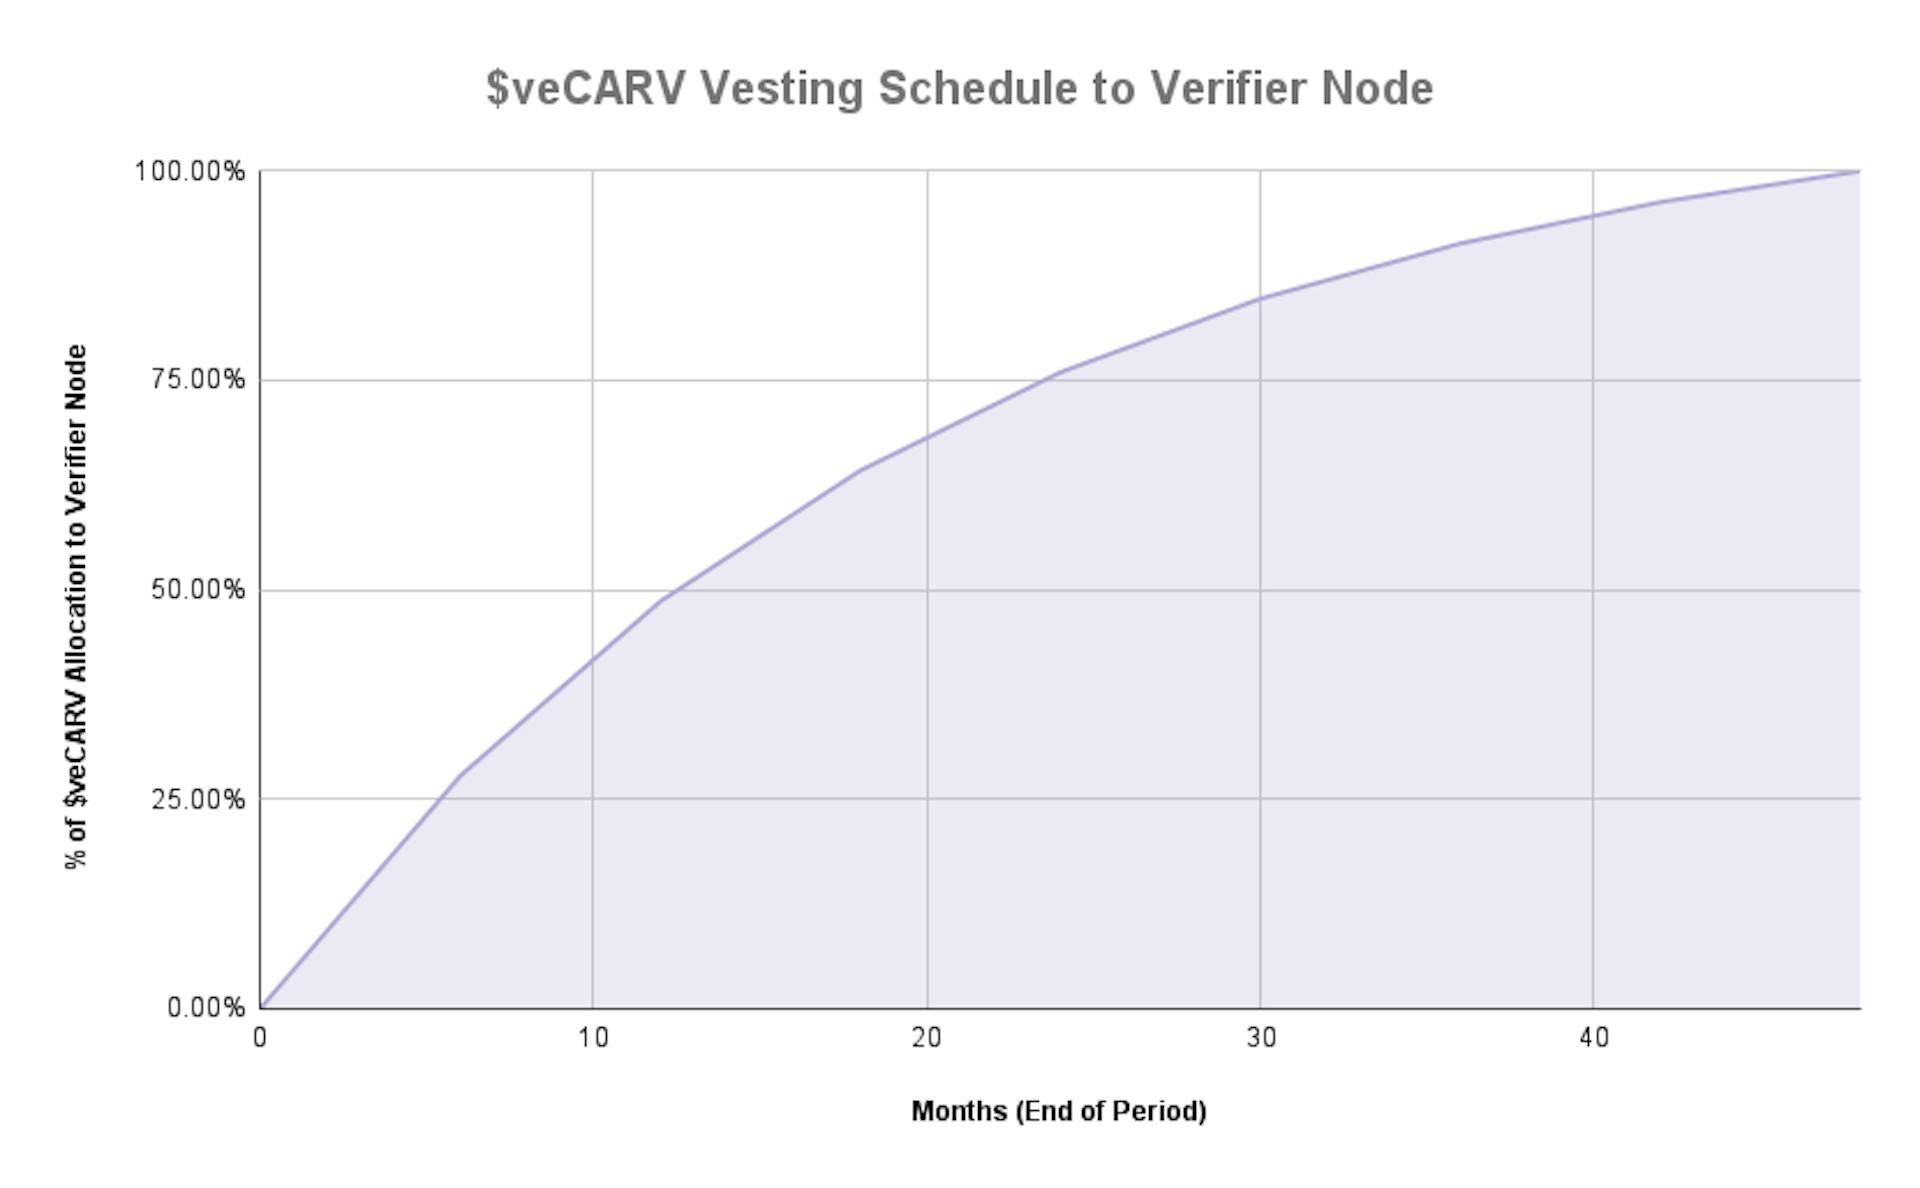 veCARV vesting schedule